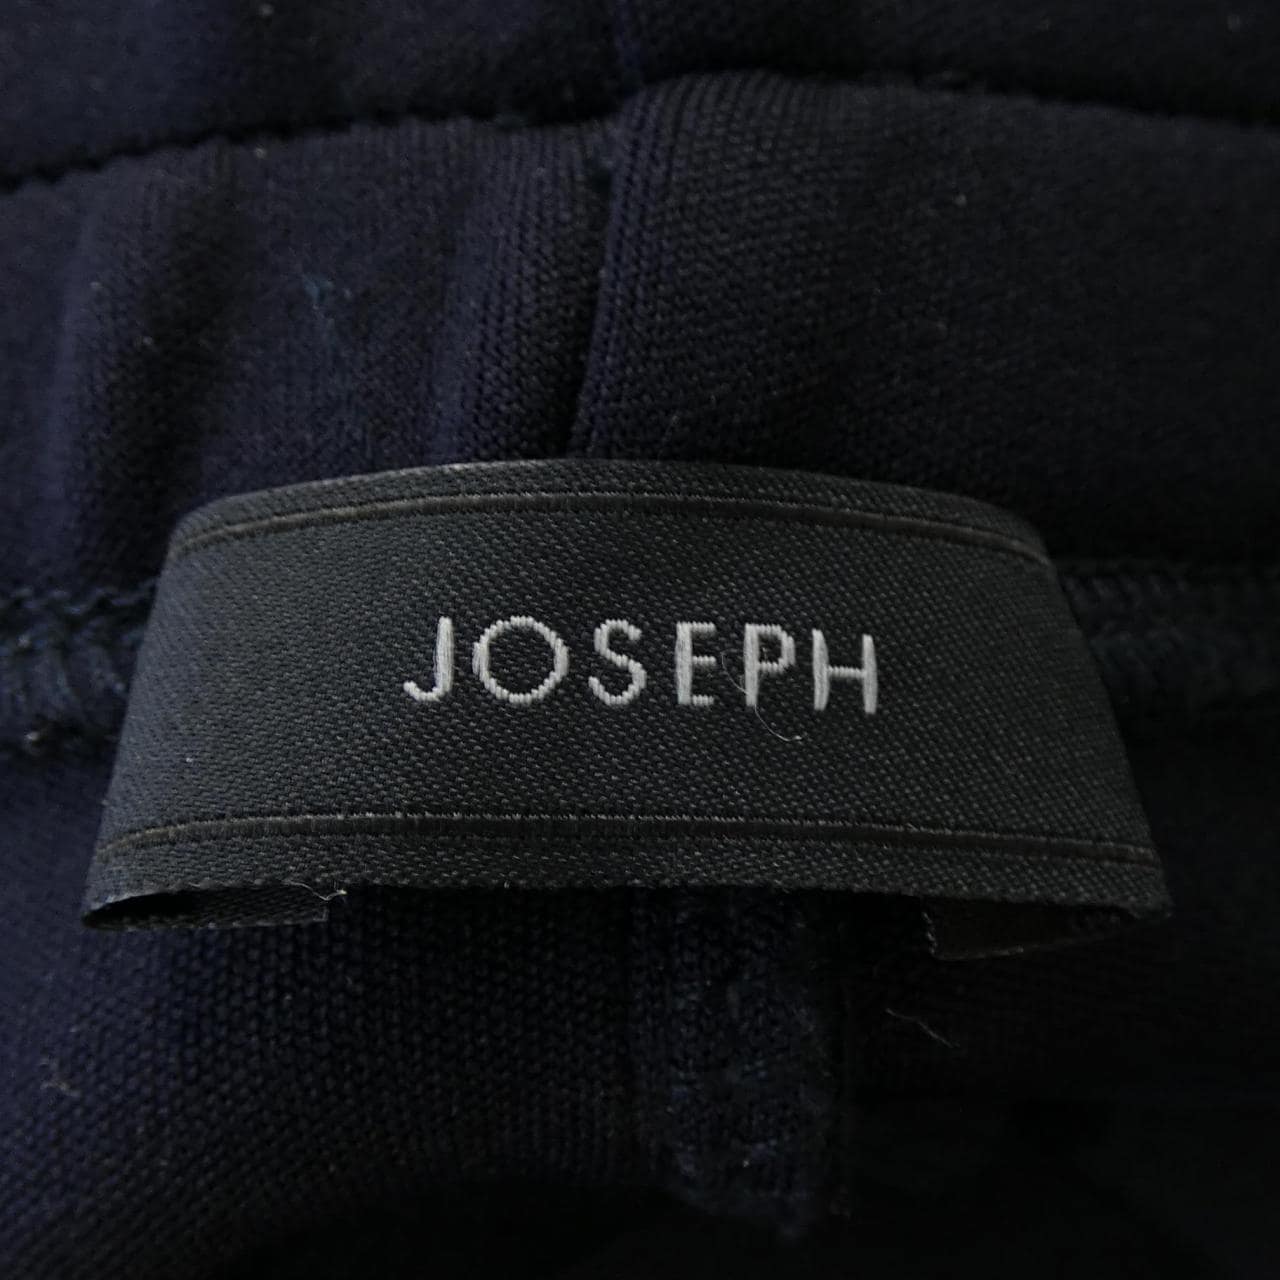 Joseph JOSEPH pants